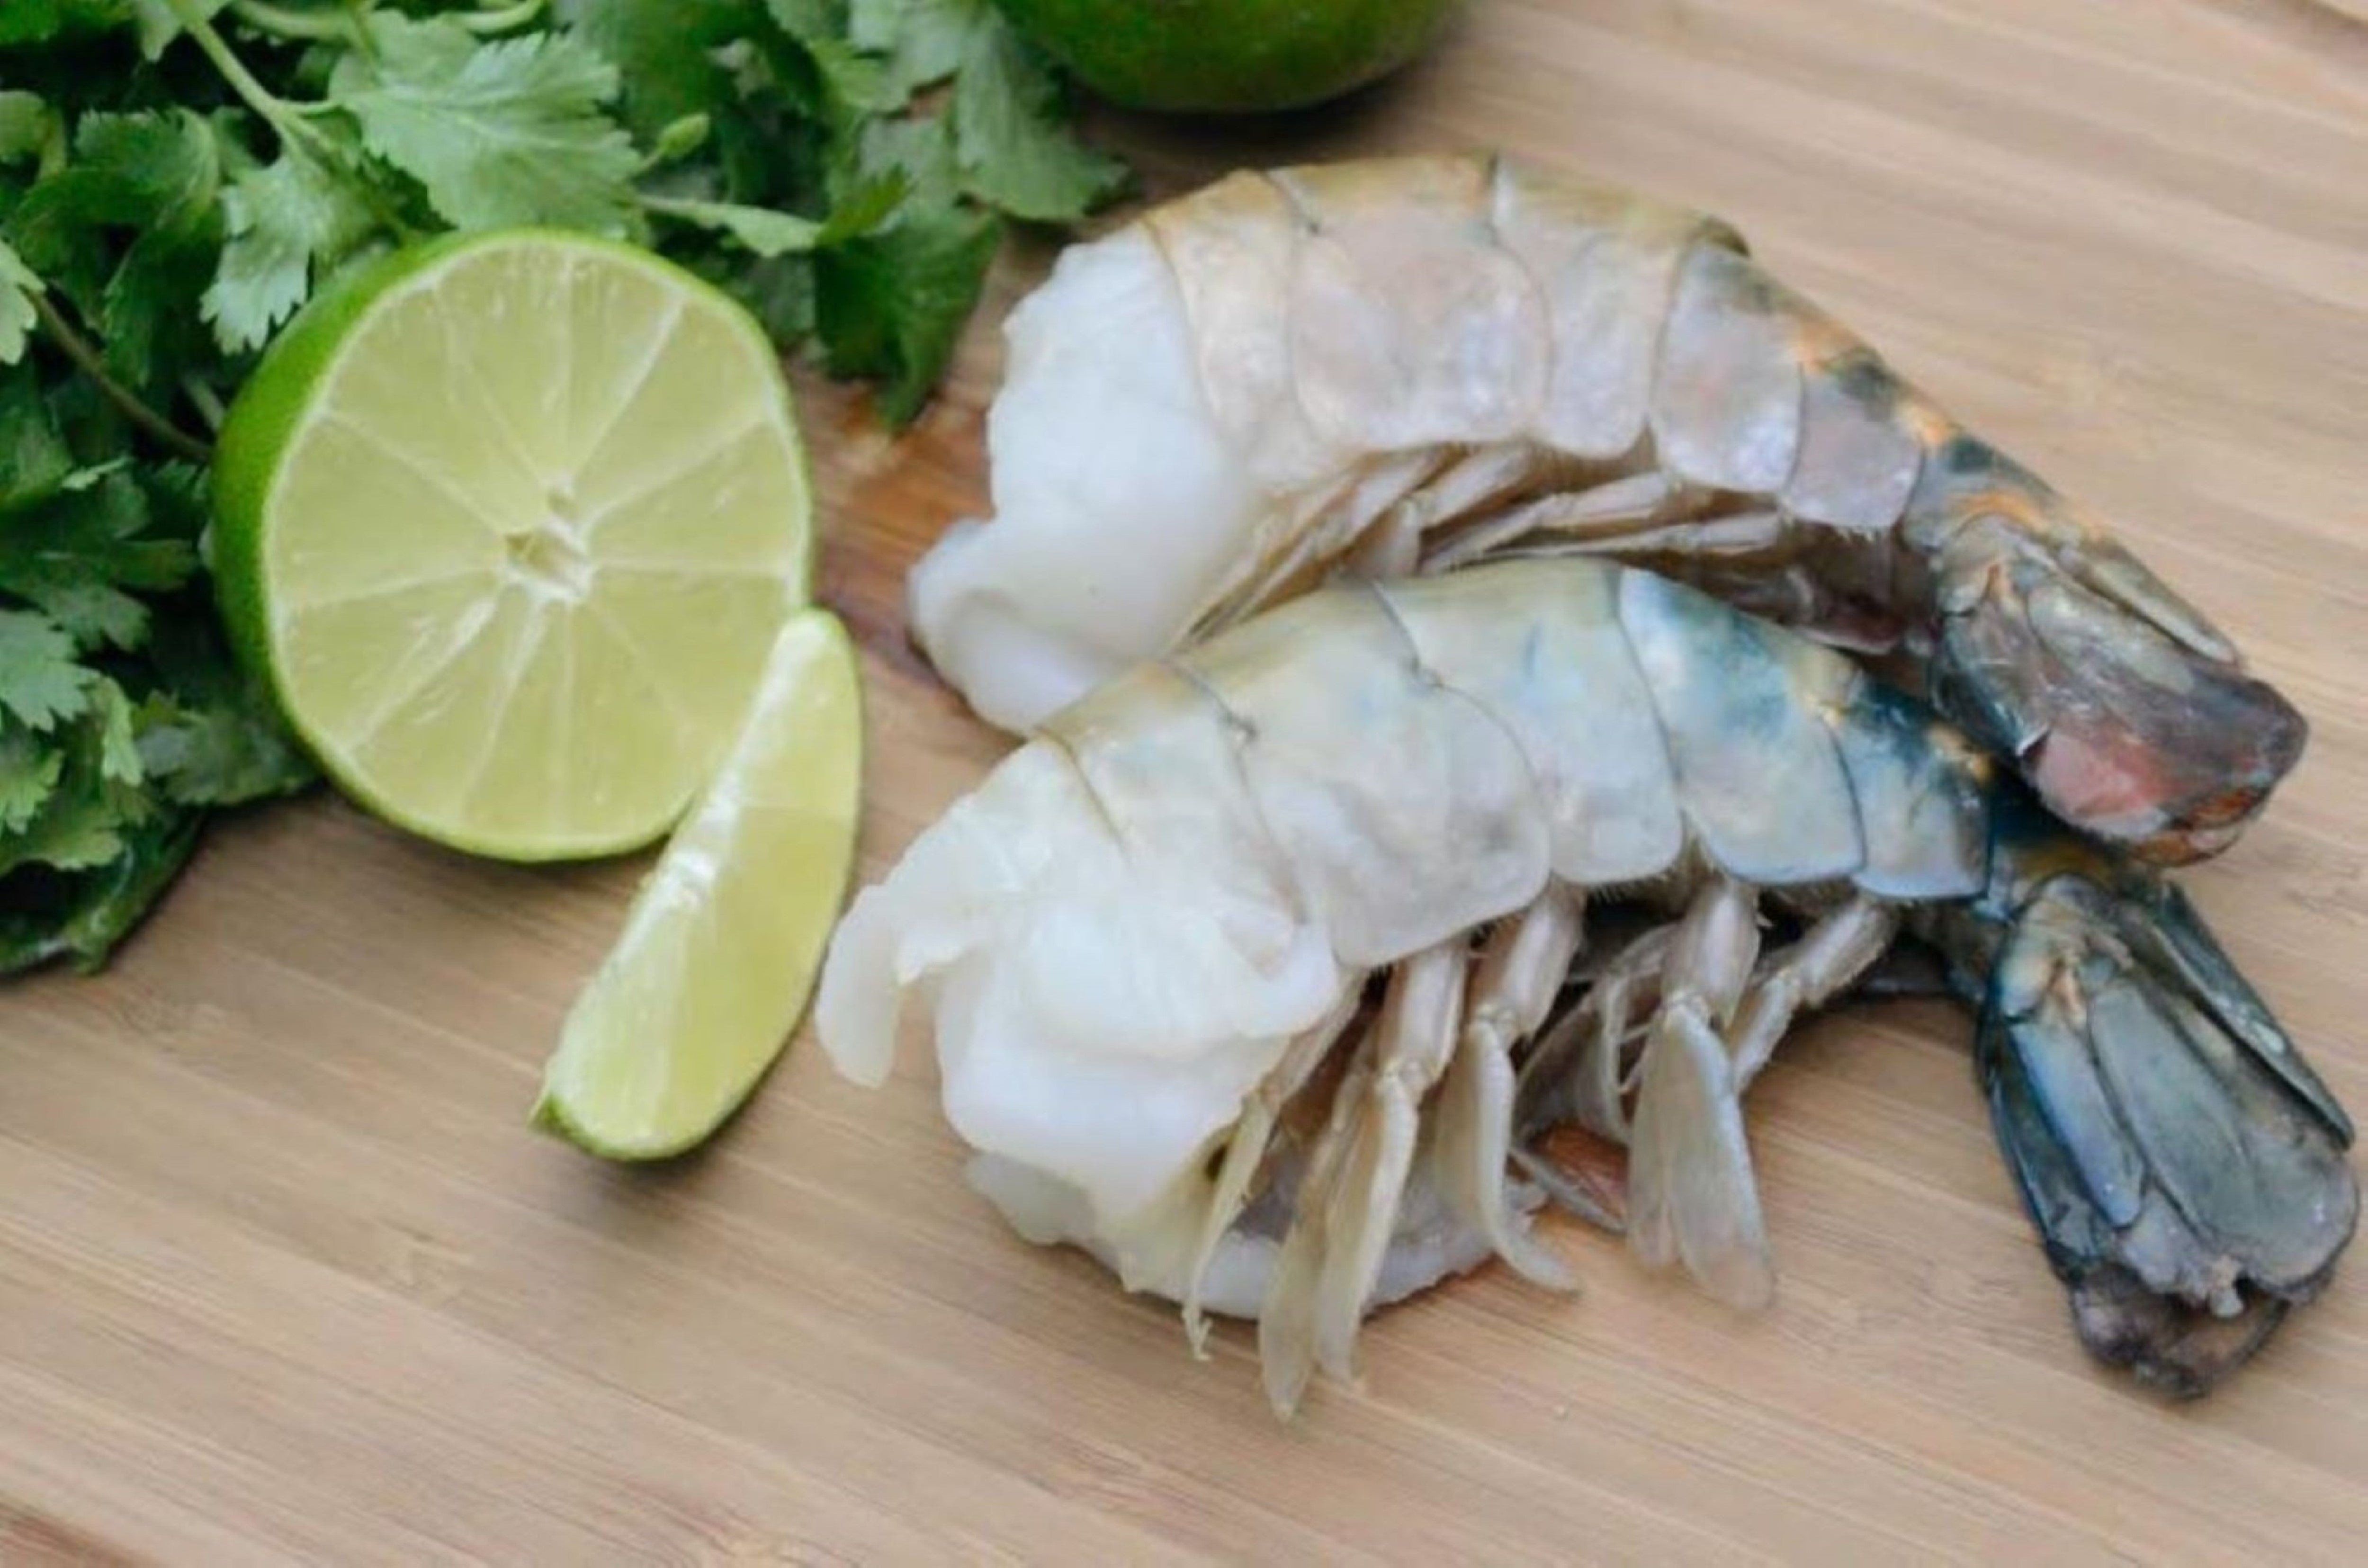 Hooks Whole Shrimp 80/60 400 g Online at Best Price, Shrimps